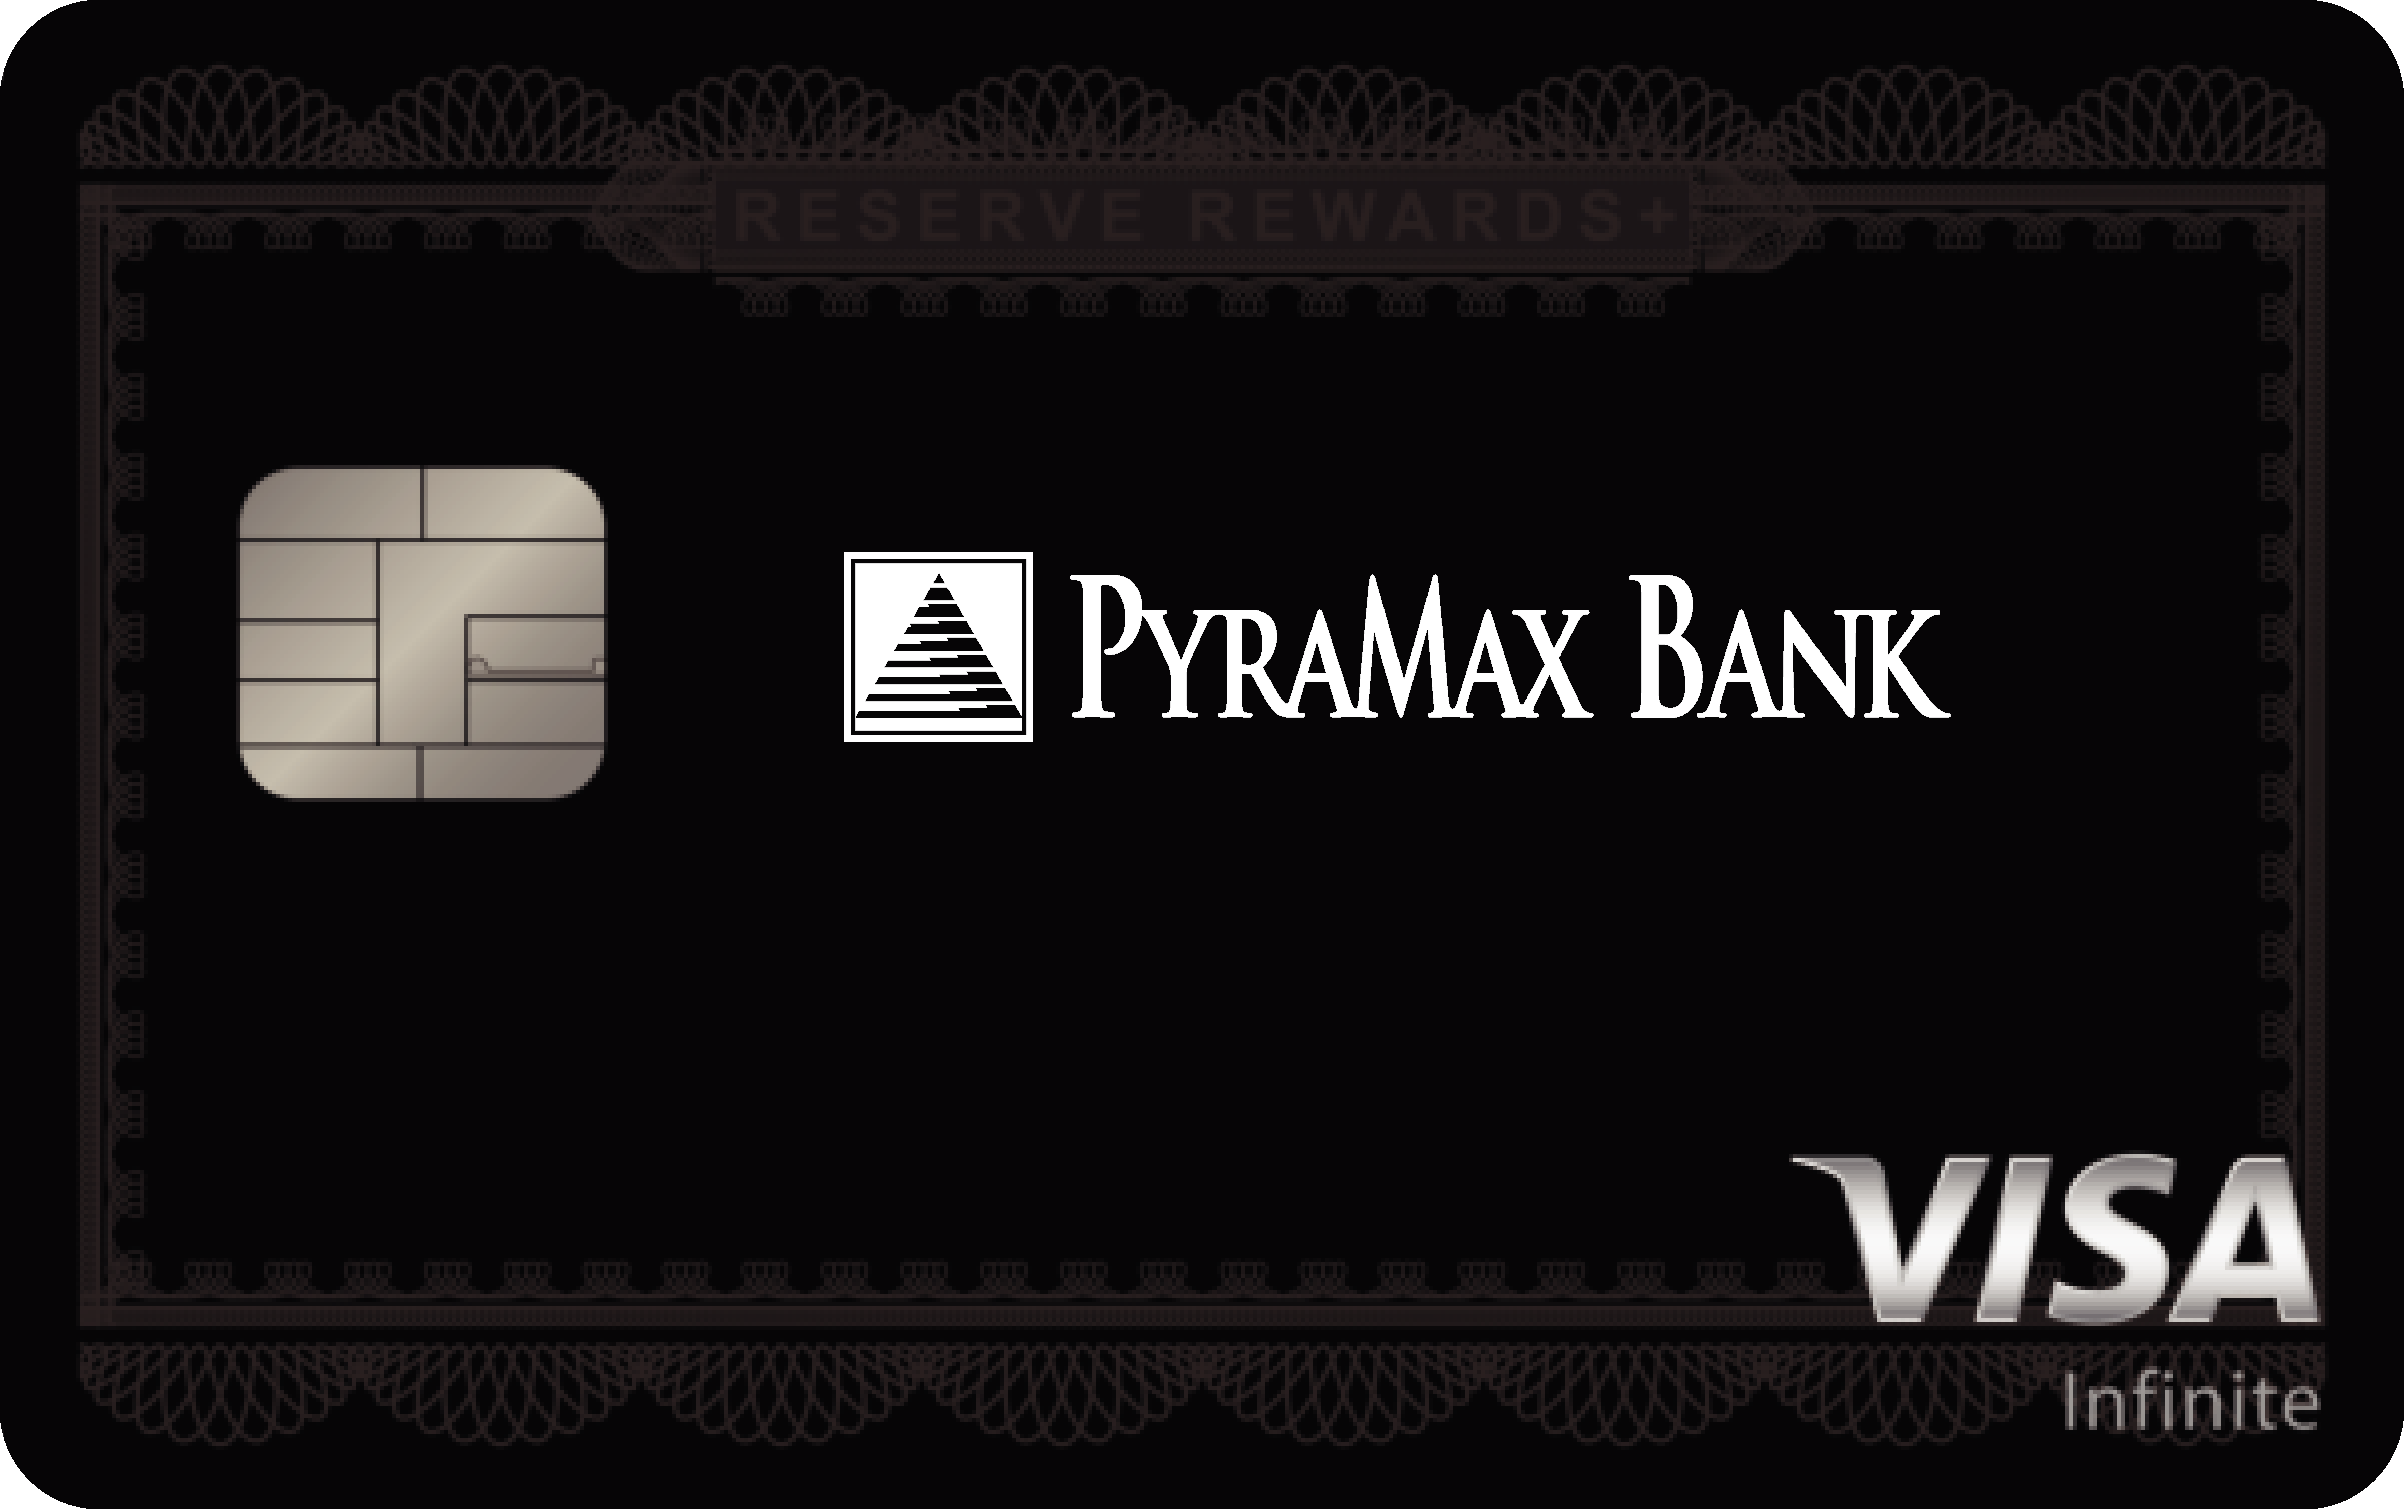 PyraMax Bank